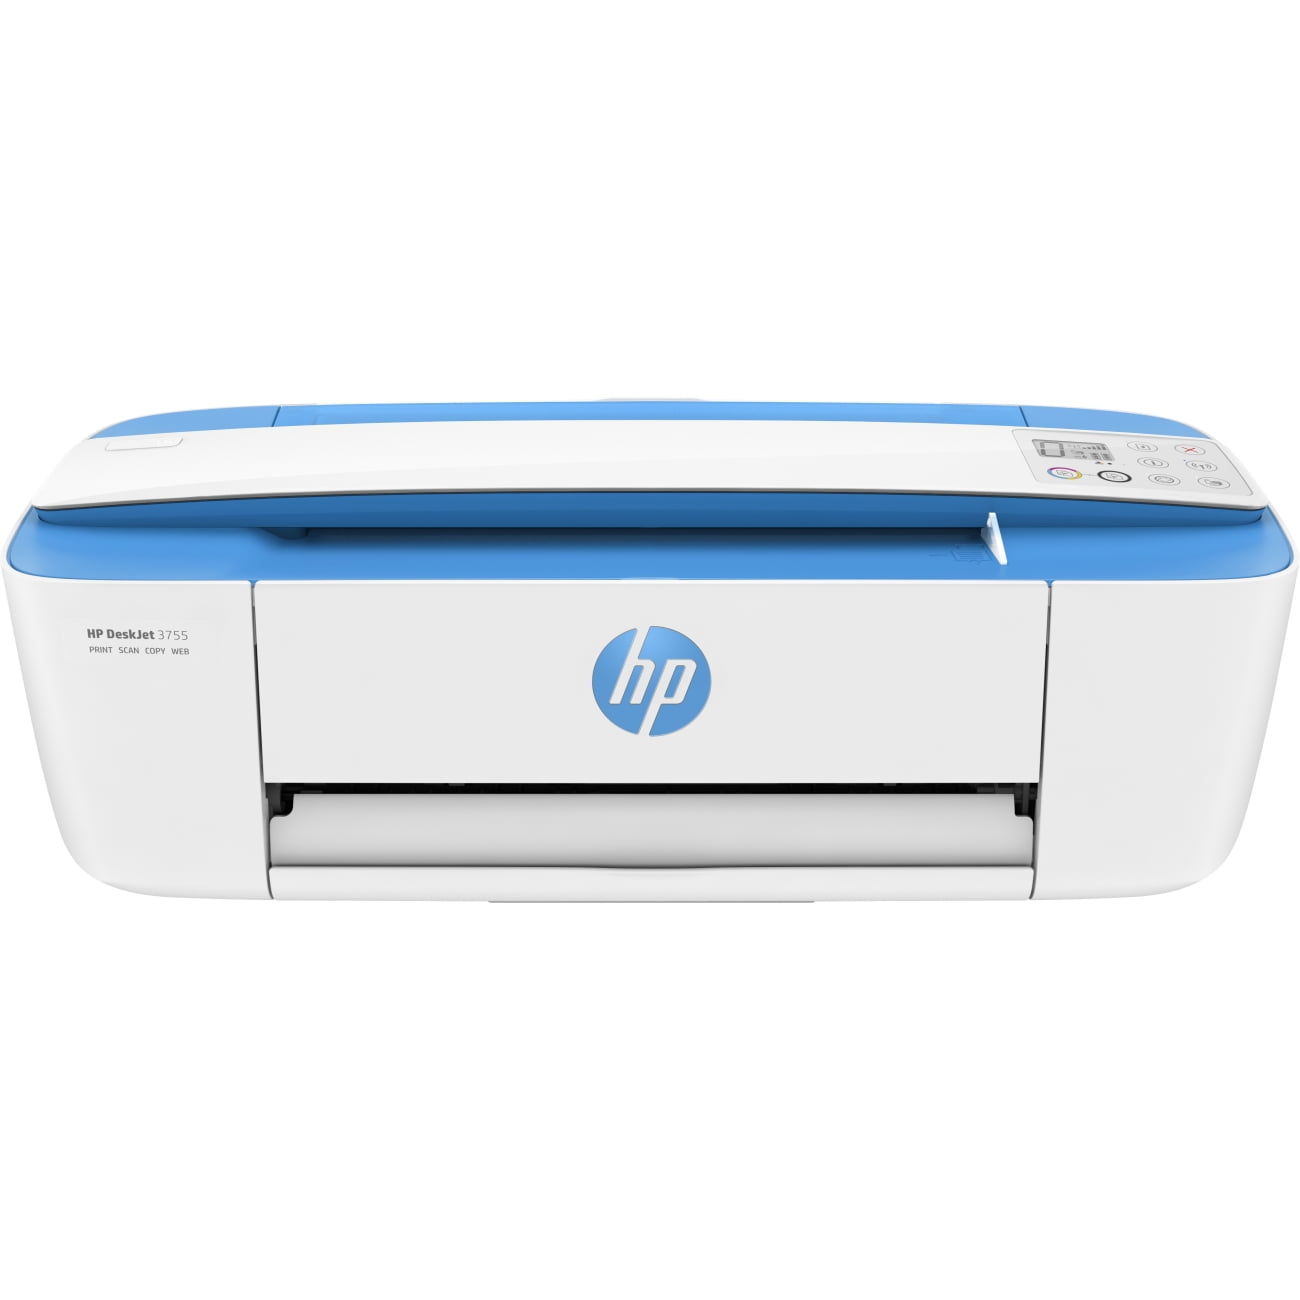 HP Deskjet 3755 Wireless Inkjet Multifunction Printer-Color-Copier/Scanner-19 ppm Color Print-4800x1200 Print-Manual Duplex Pages Monthly-60 sheets Input-Color Scanner-600 Op... - Walmart.com